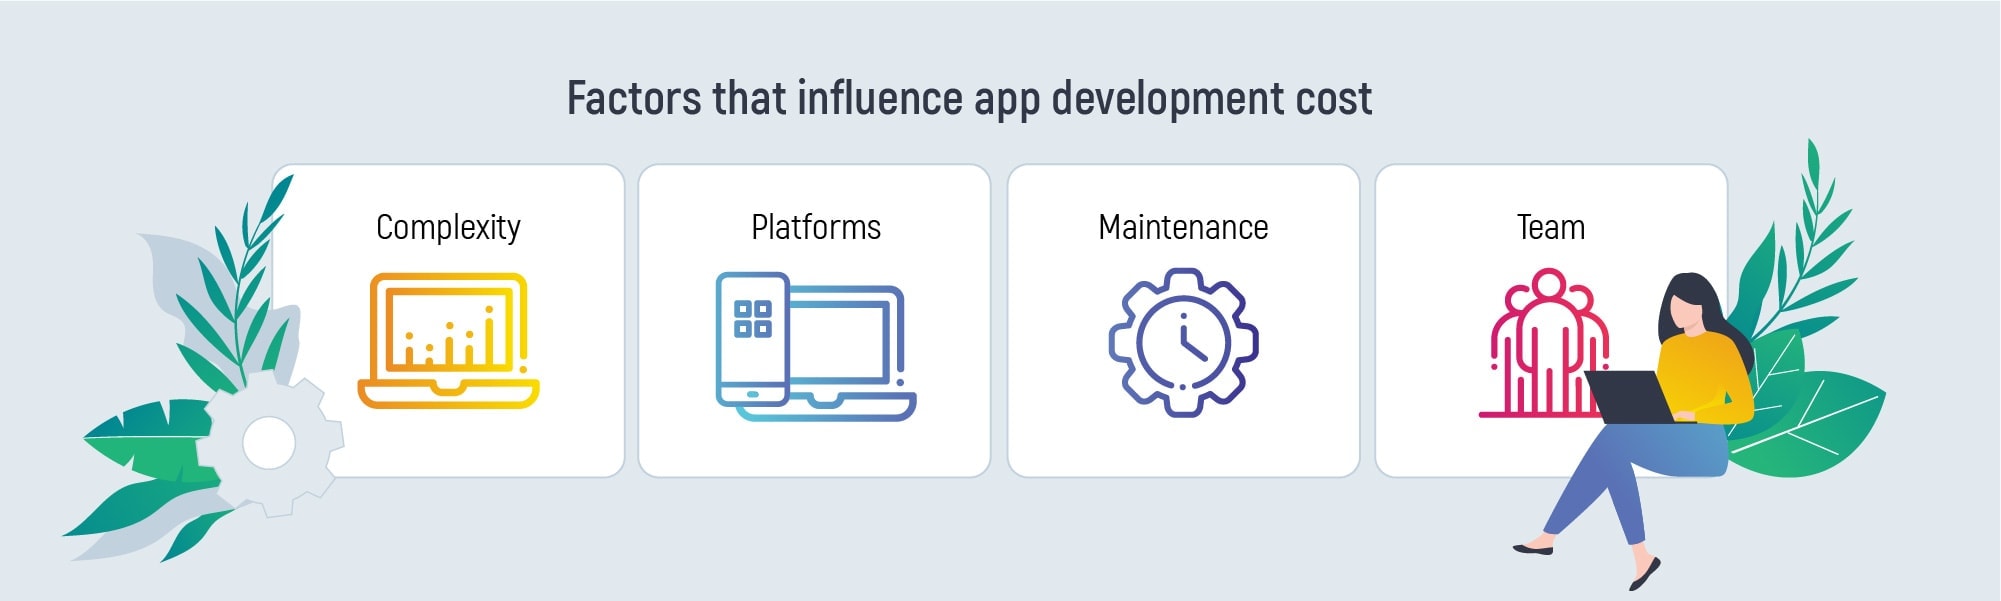 Factors that influence app development cost